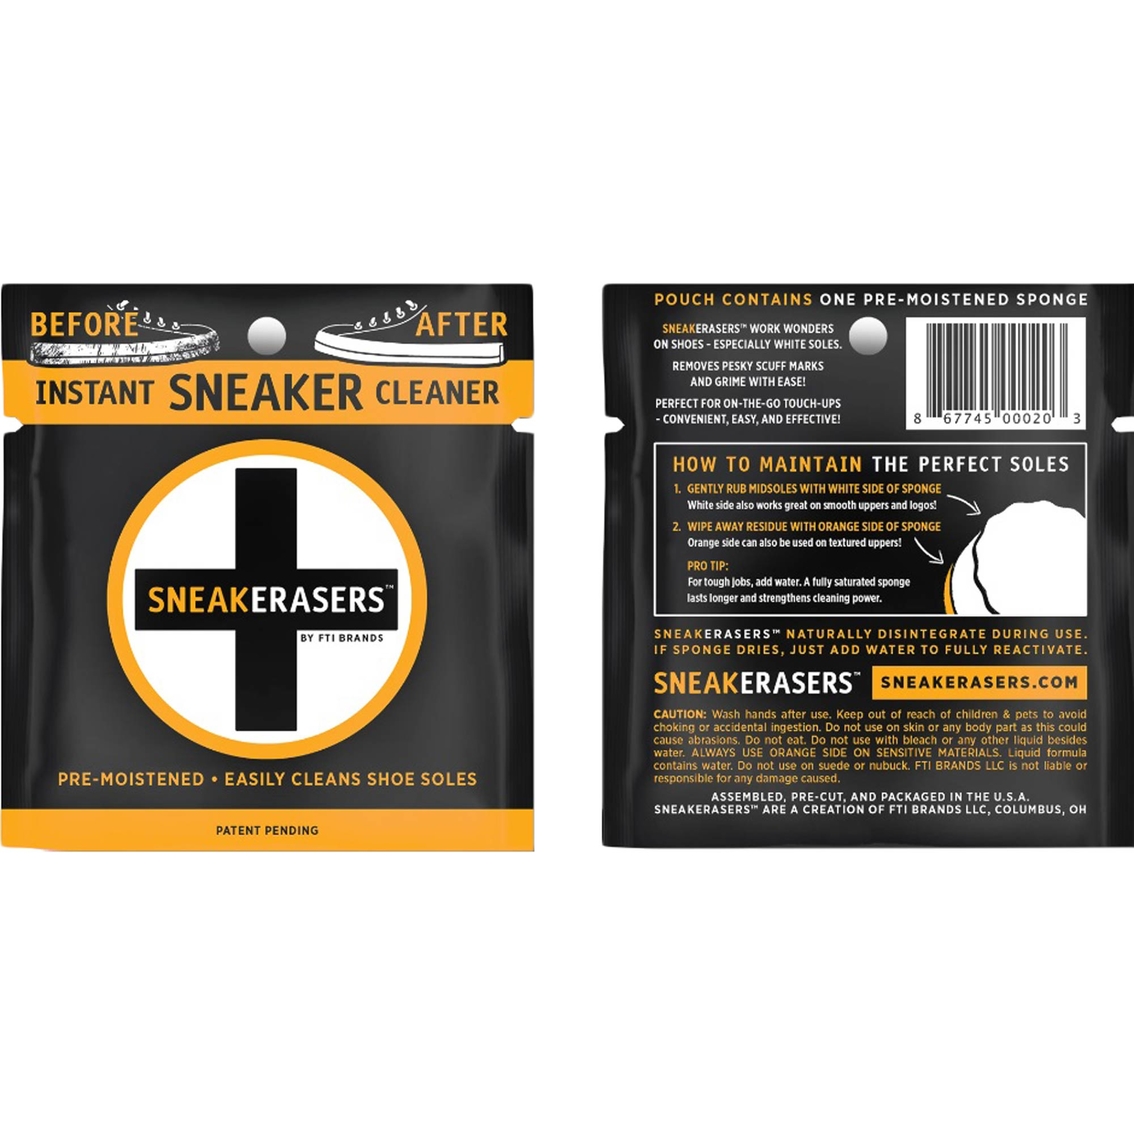 SneakERASERS Instant Sneaker Cleaner Pre Moistened Sponge - Image 2 of 3